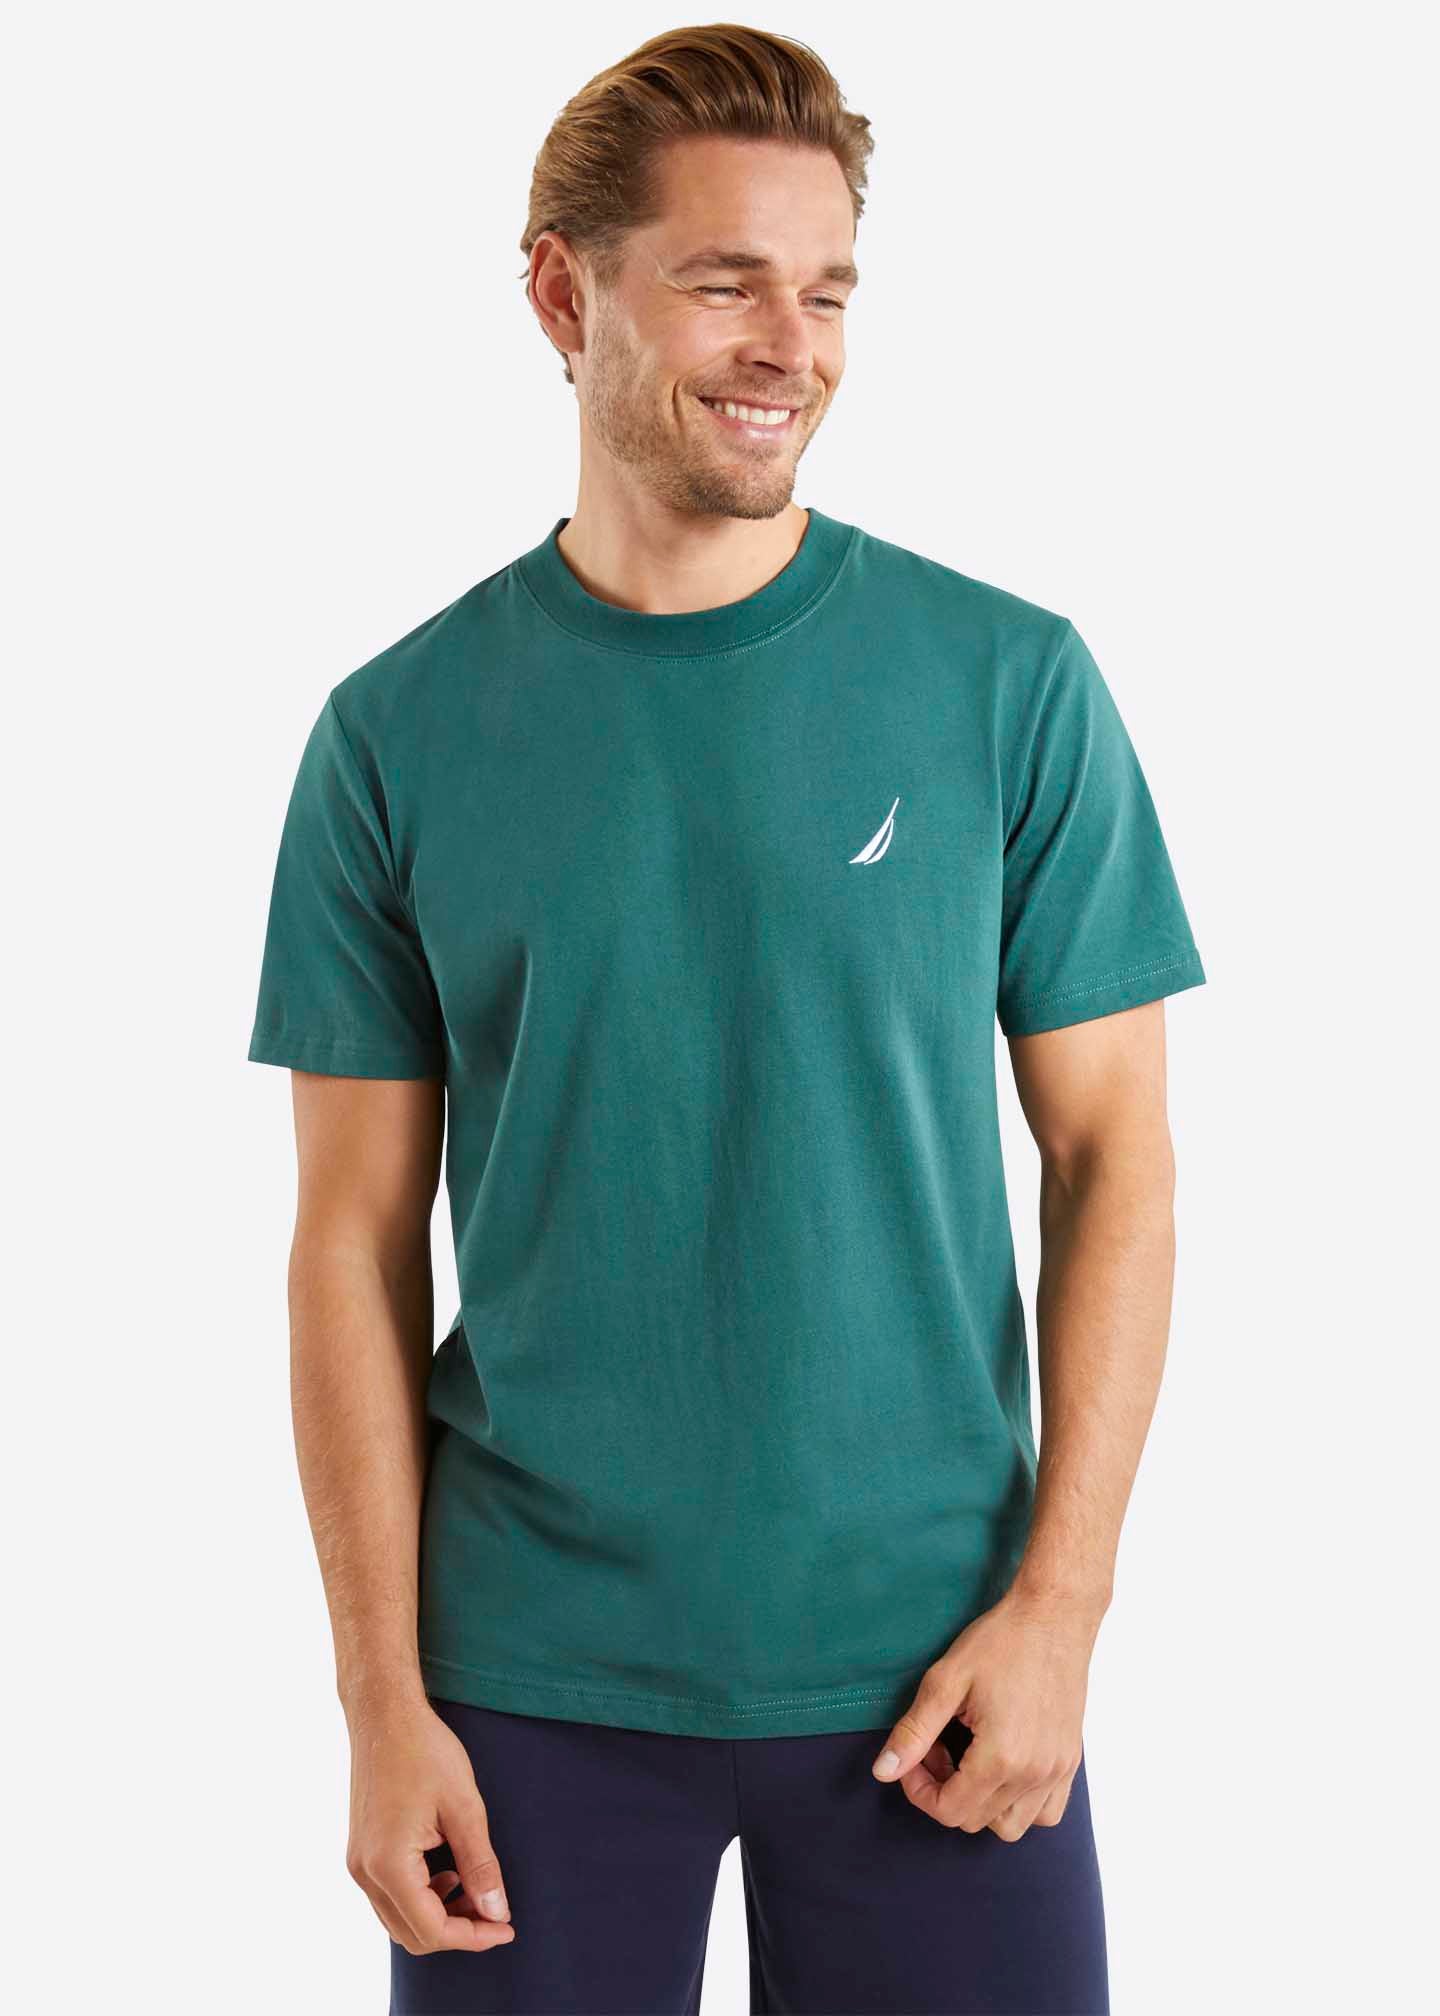 Manitoba T-Shirt